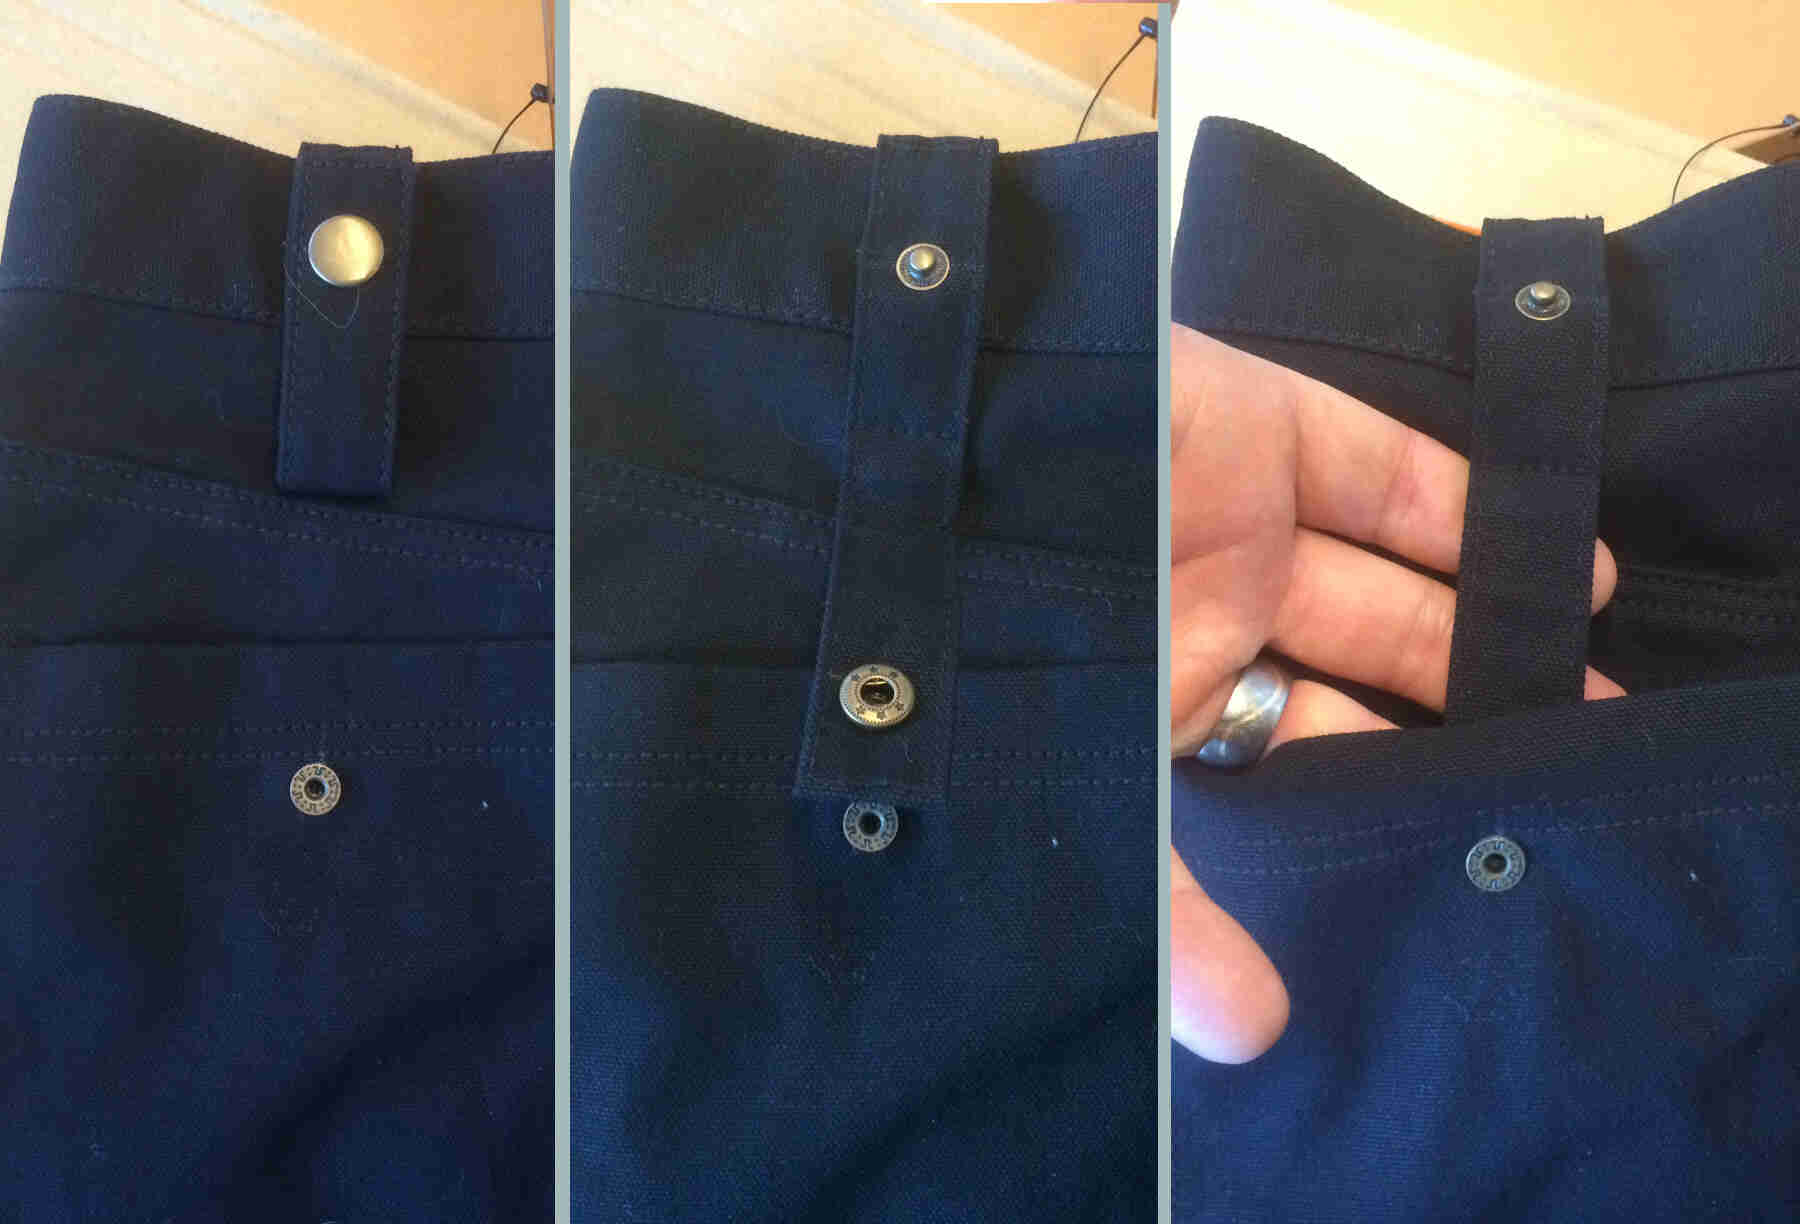 Surly Pants - blue - closed belt loop detail (closed, open, inner pocket snap) detail - downward view